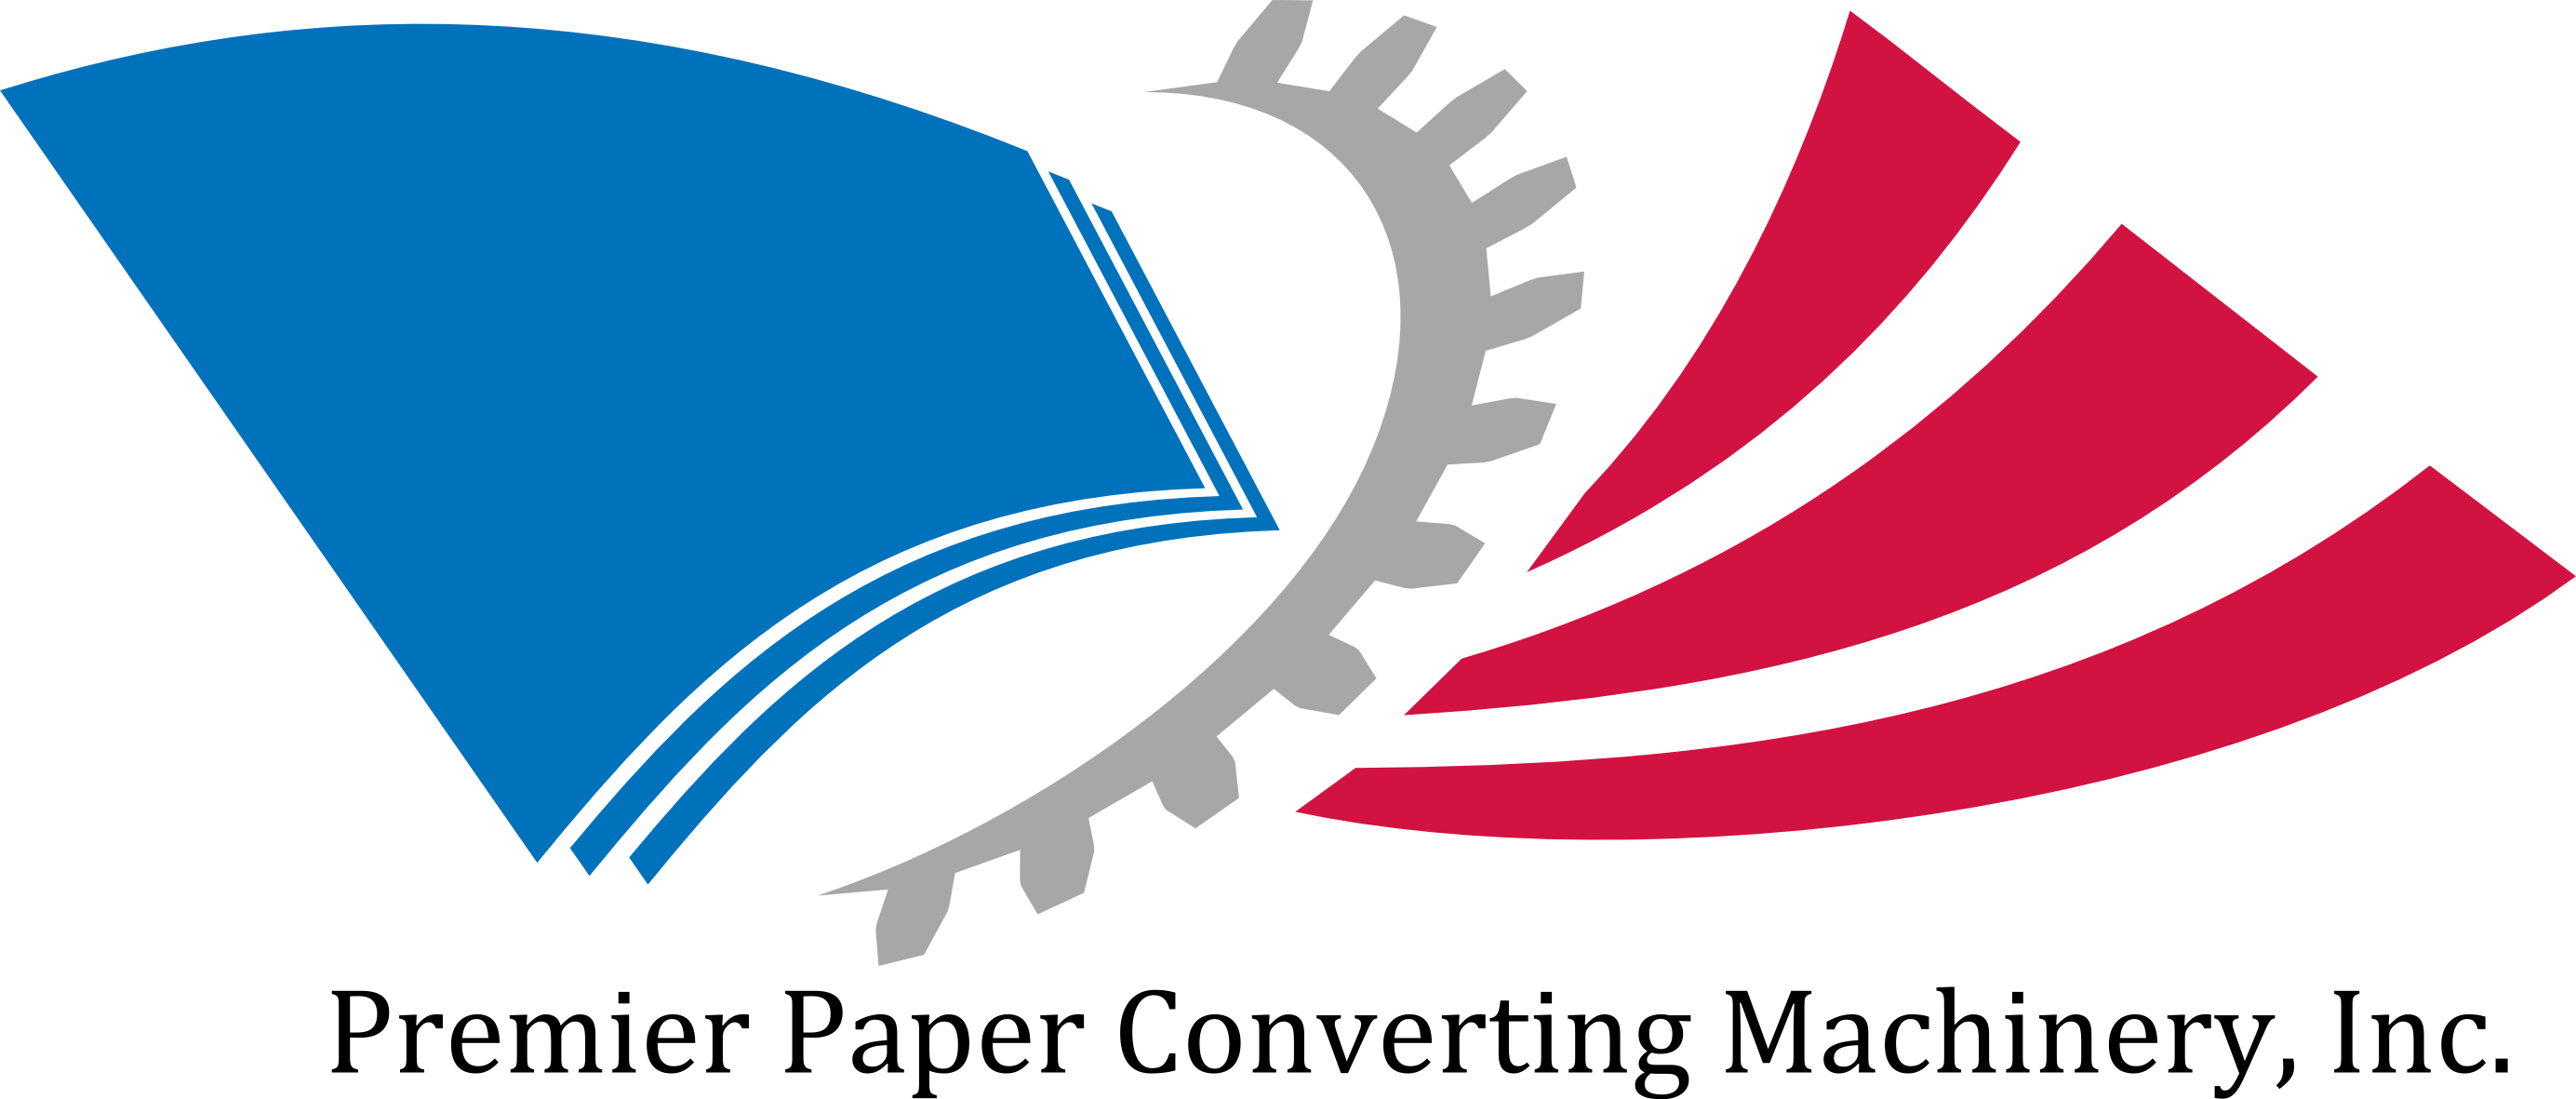 Machinery Logo - Partition Equipment - Premier Paper Machinery │ Goettsch